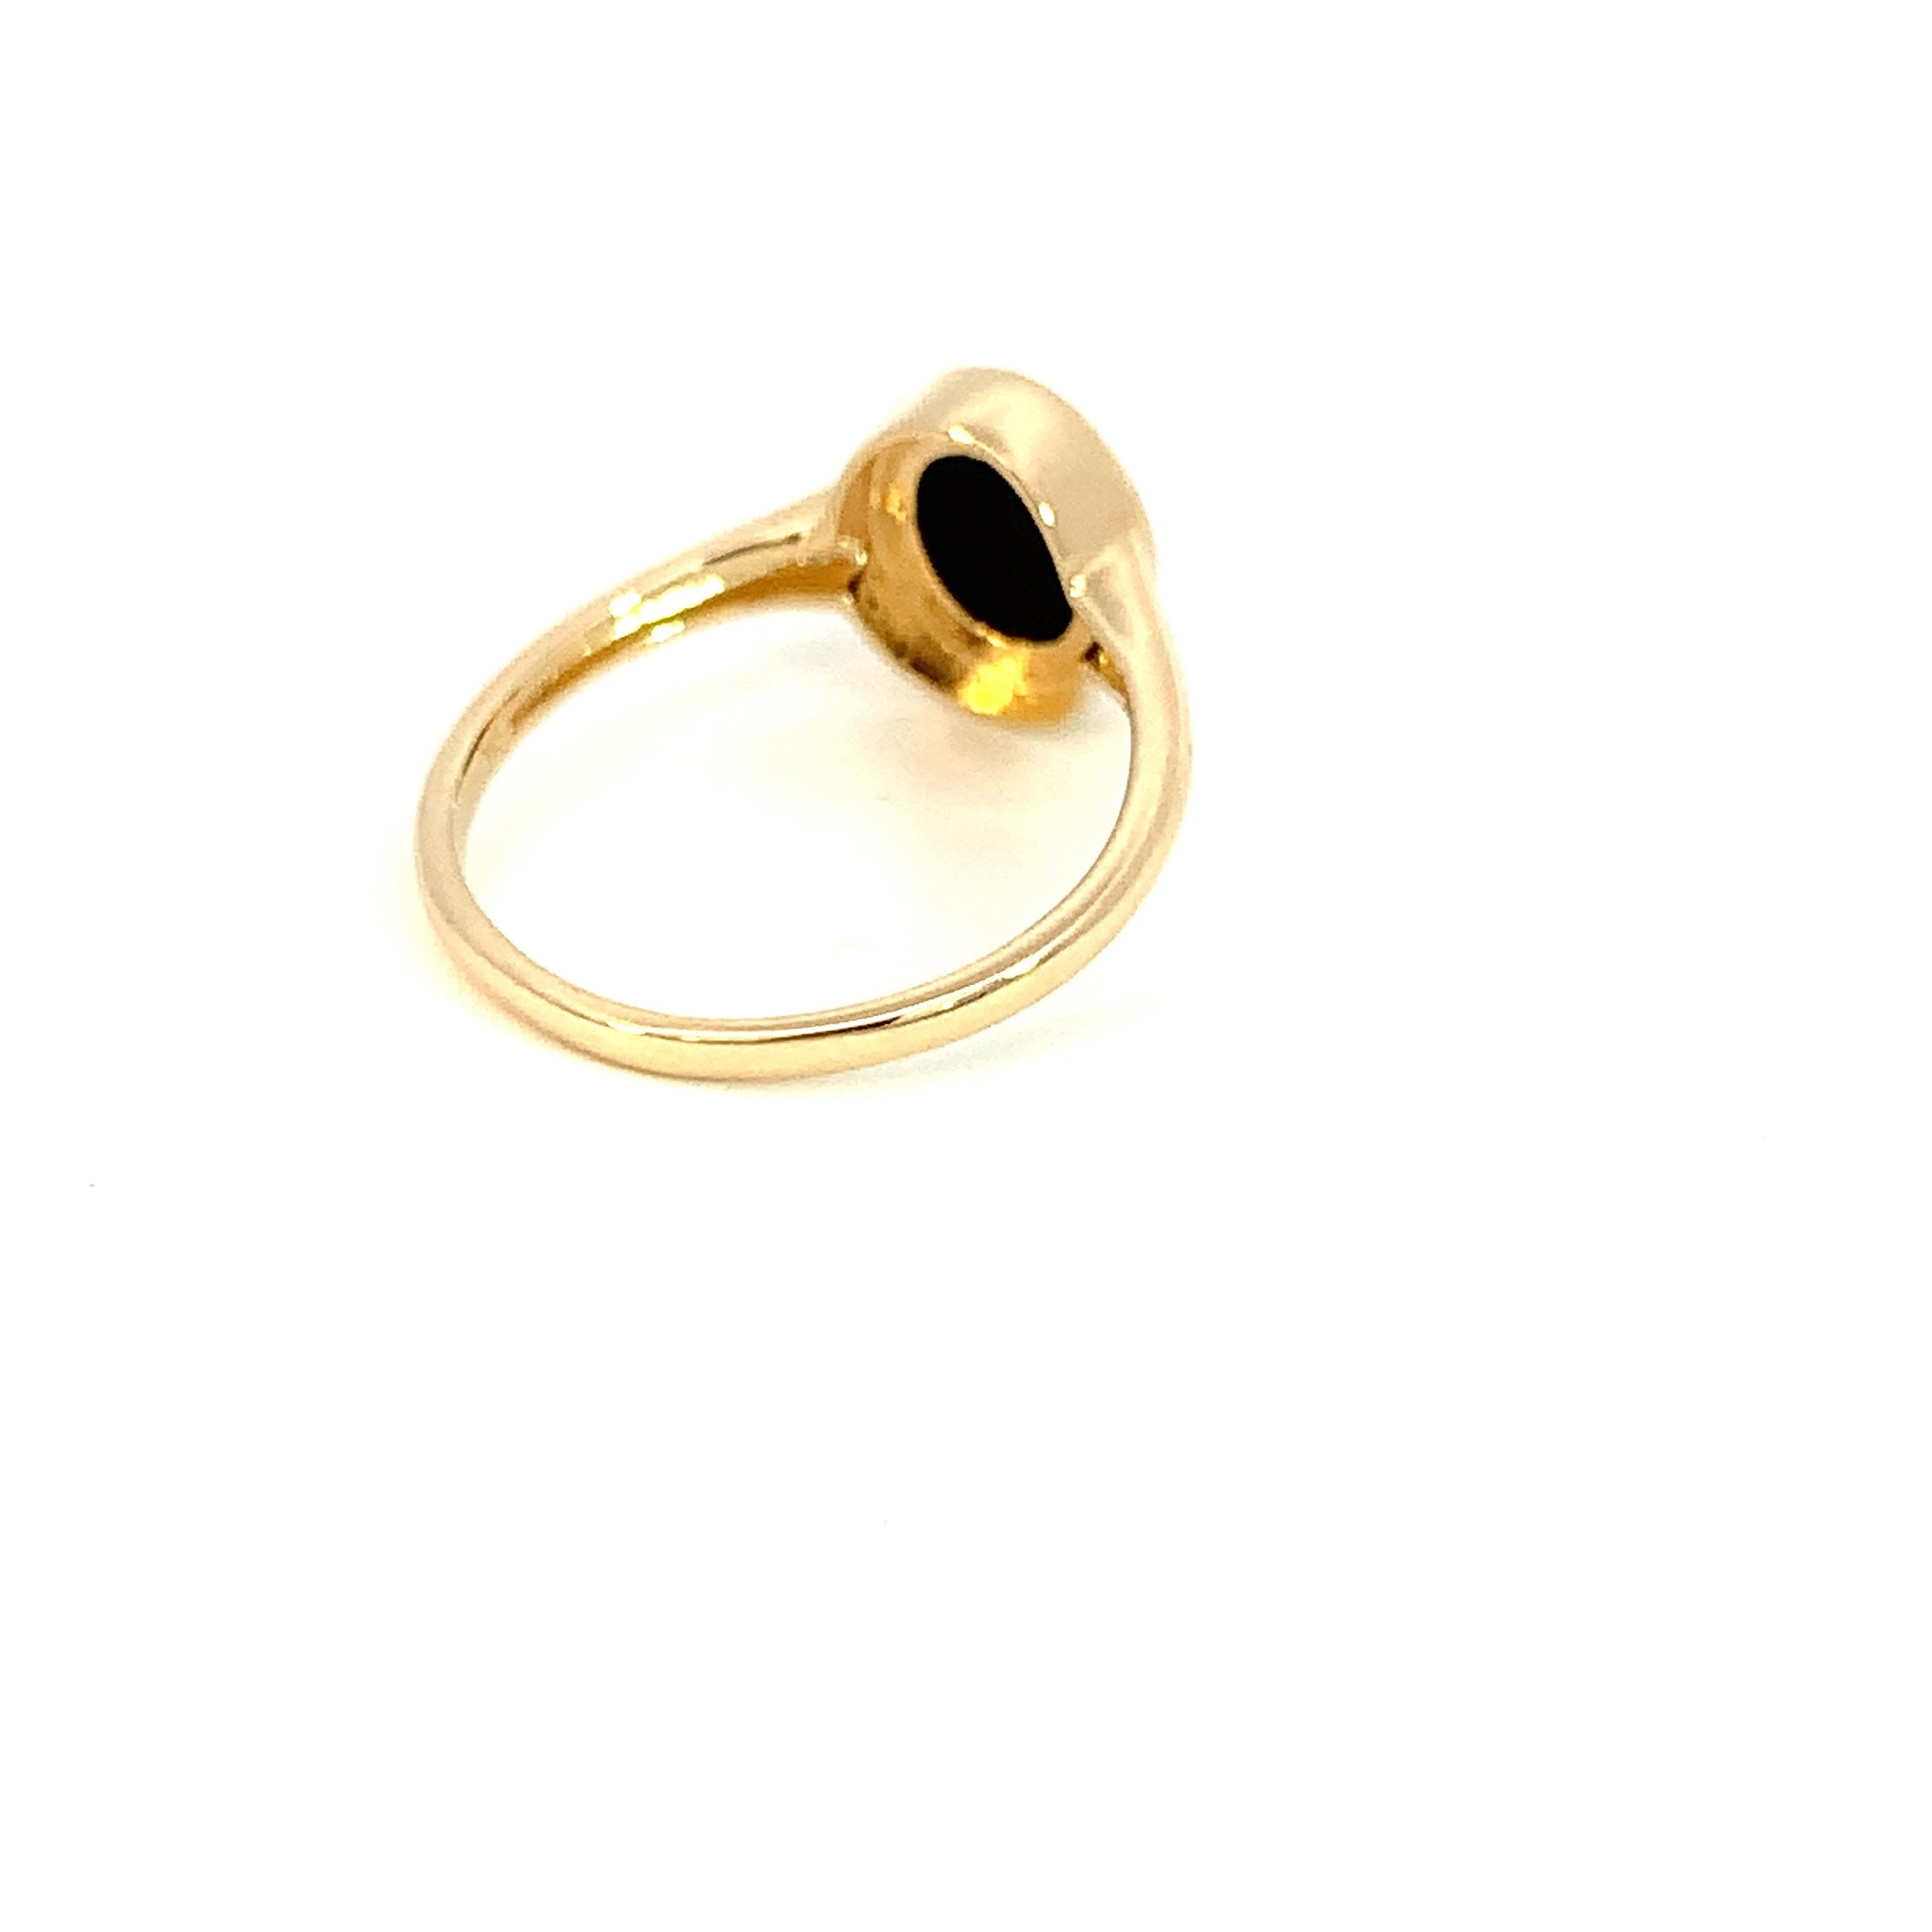 9kt Yellow Gold solitaire 9x7mm Opal triplet ring - Masterpiece Jewellery Opal & Gems Sydney Australia | Online Shop